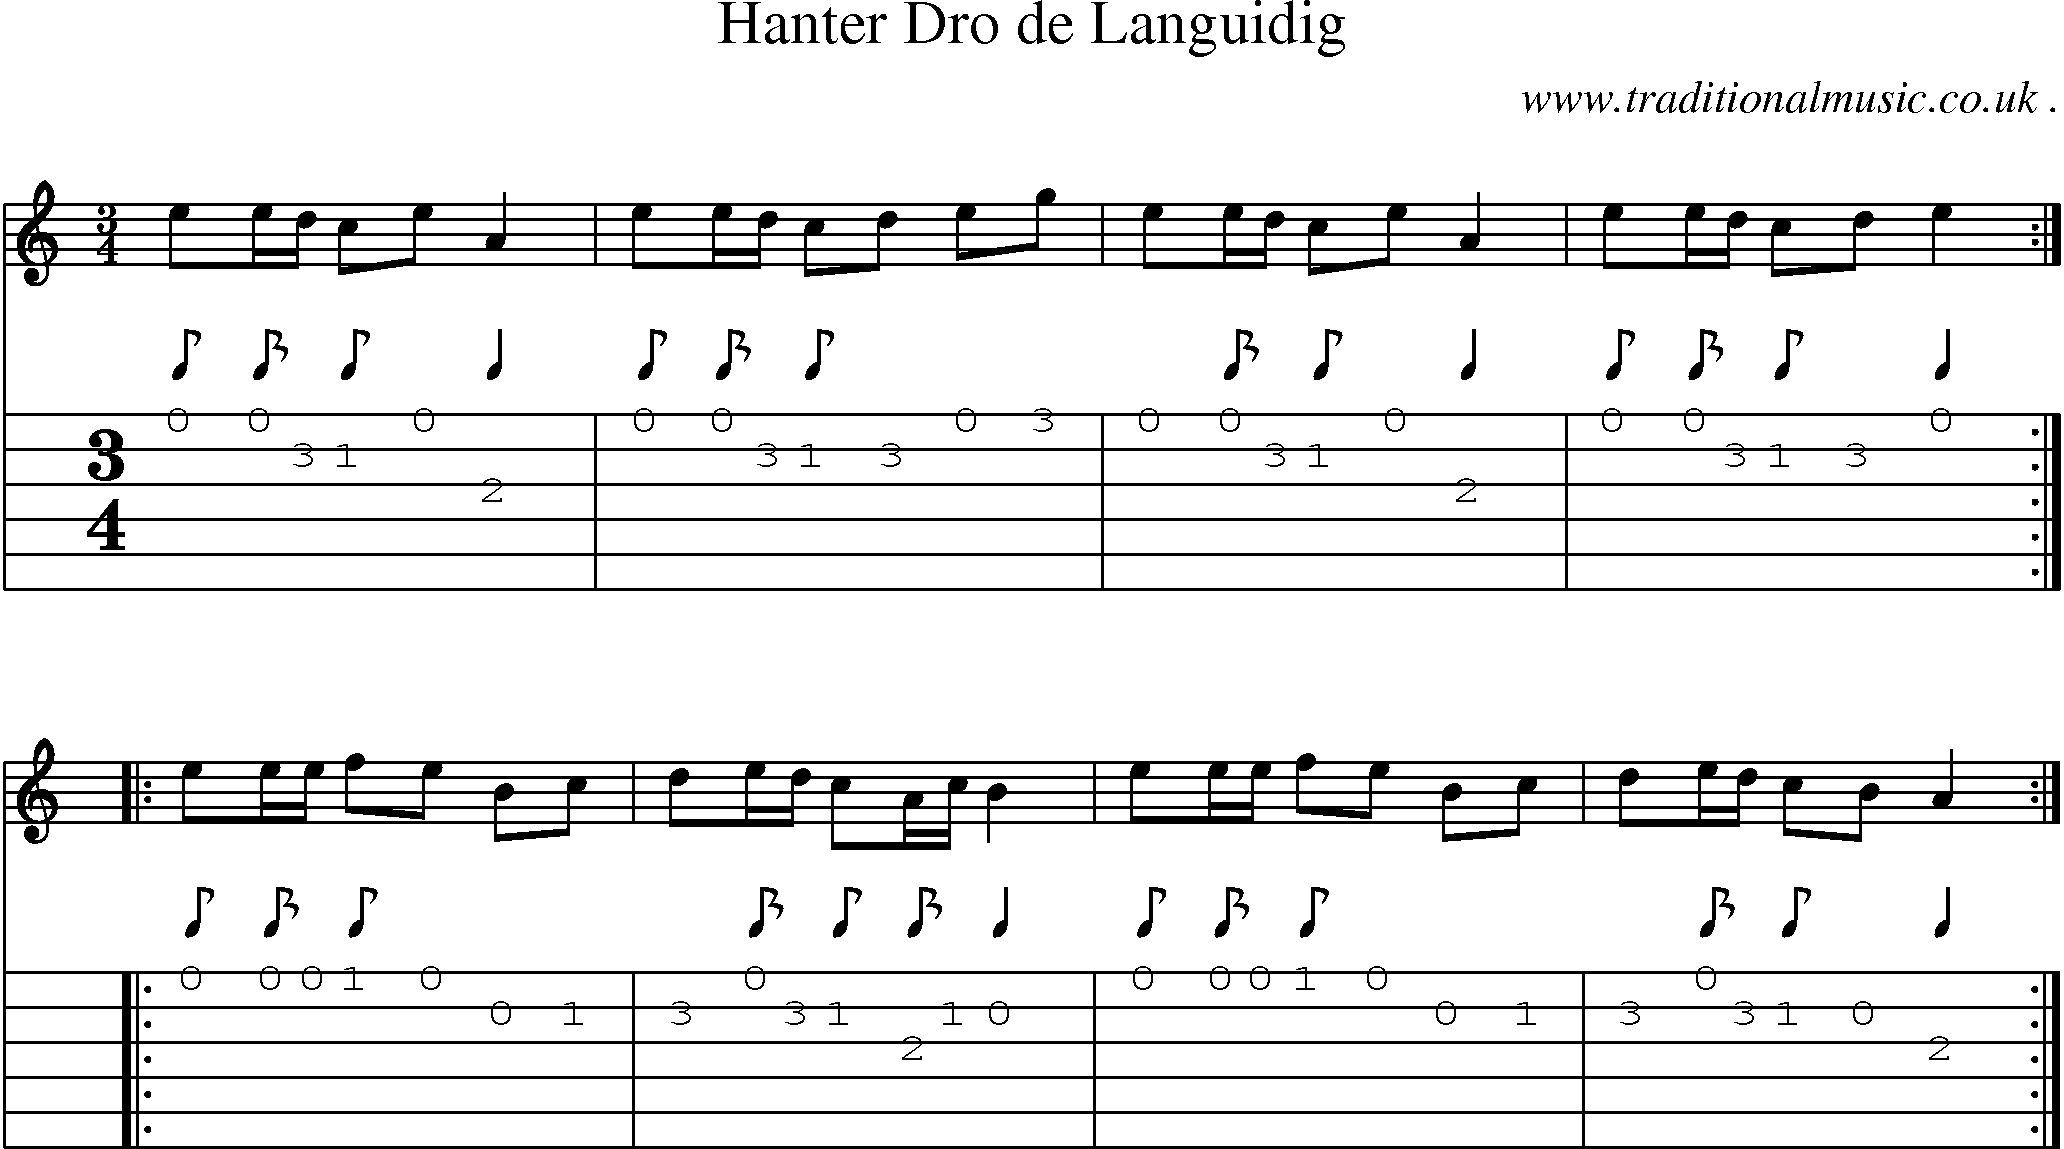 Sheet-Music and Guitar Tabs for Hanter Dro De Languidig